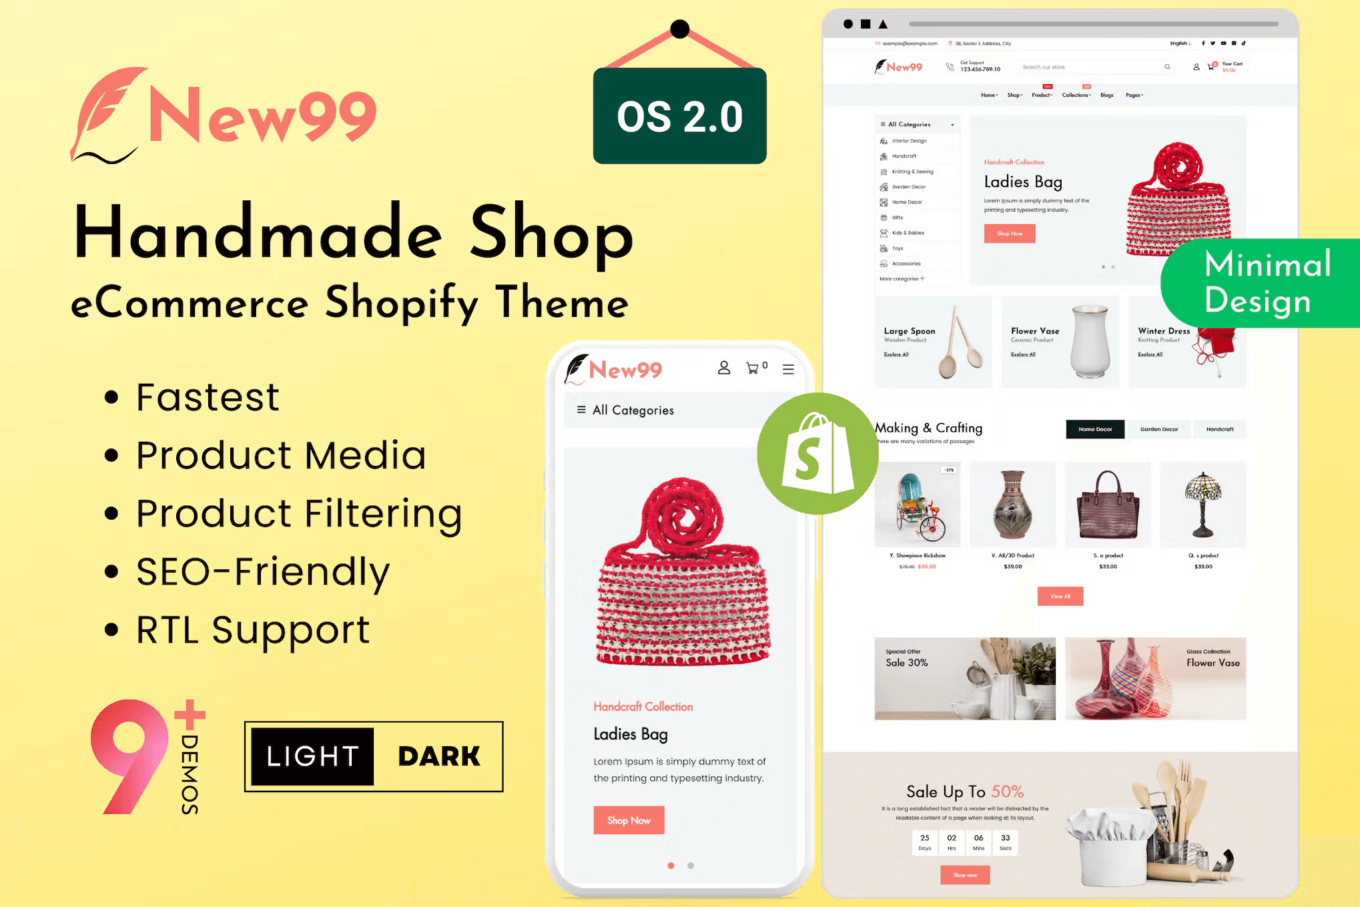 New99 - Handmade Shop eCommerce Shopify Theme 2.0